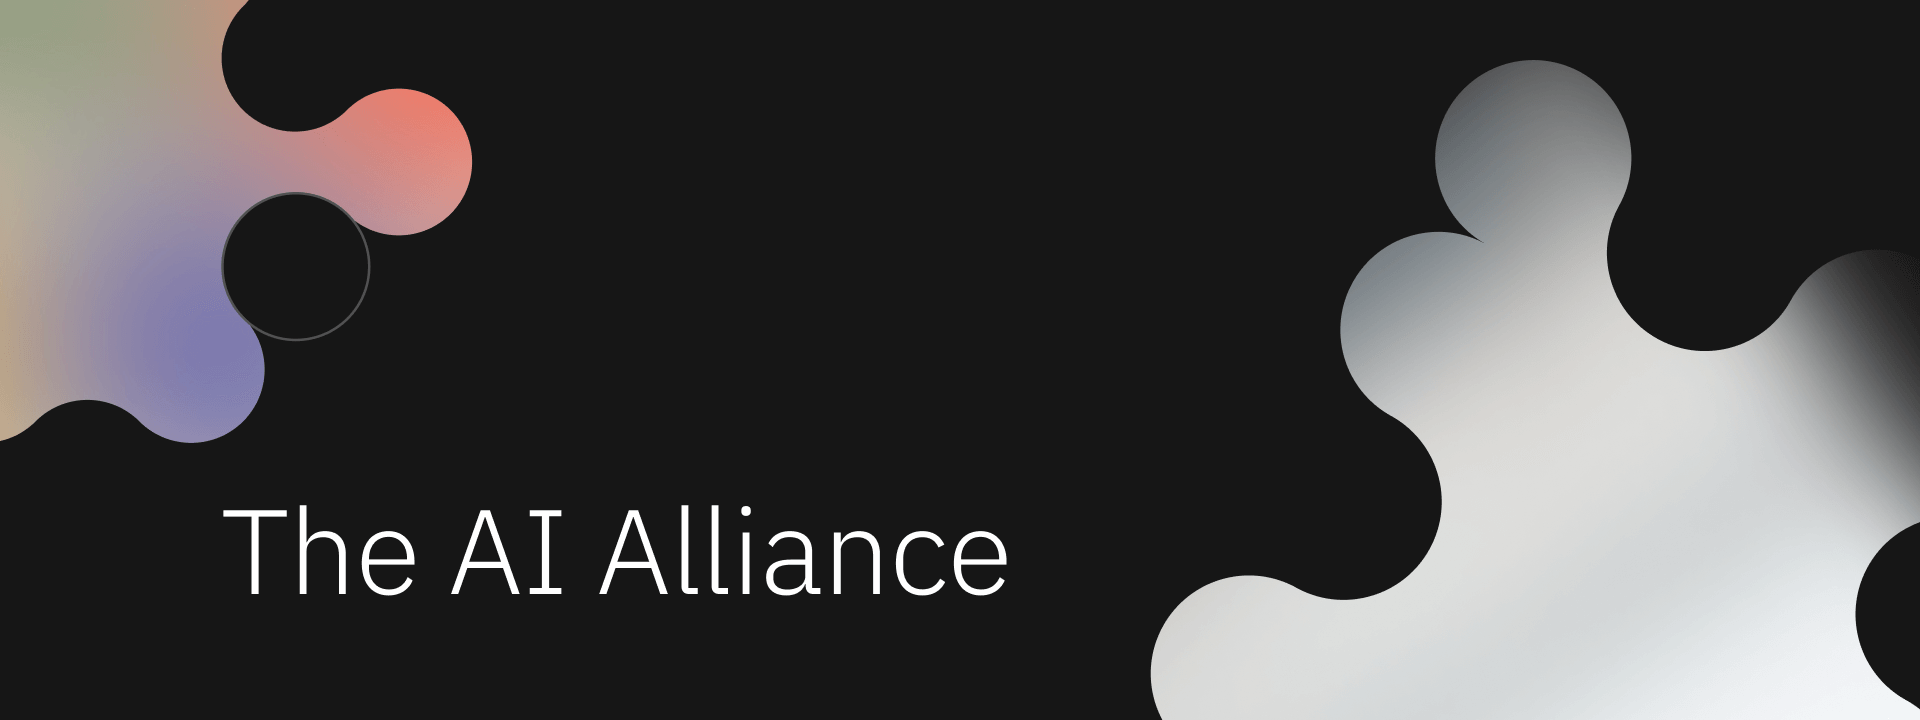 AI ALIENCE symbol. Courtesy of IBM